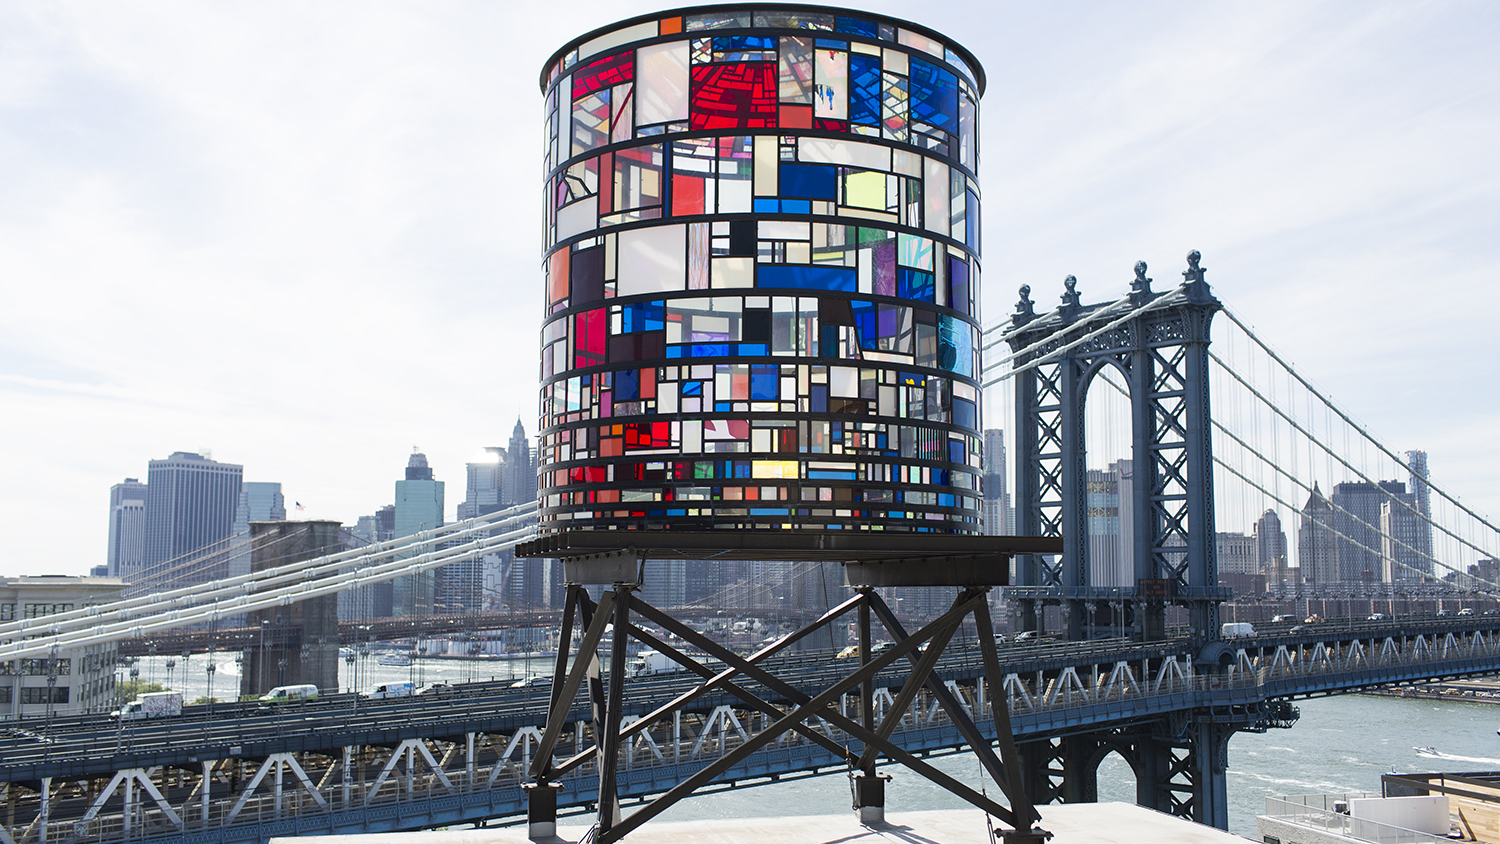 Tom Fruin's Watertowers Transforming the Brooklyn Waterfront